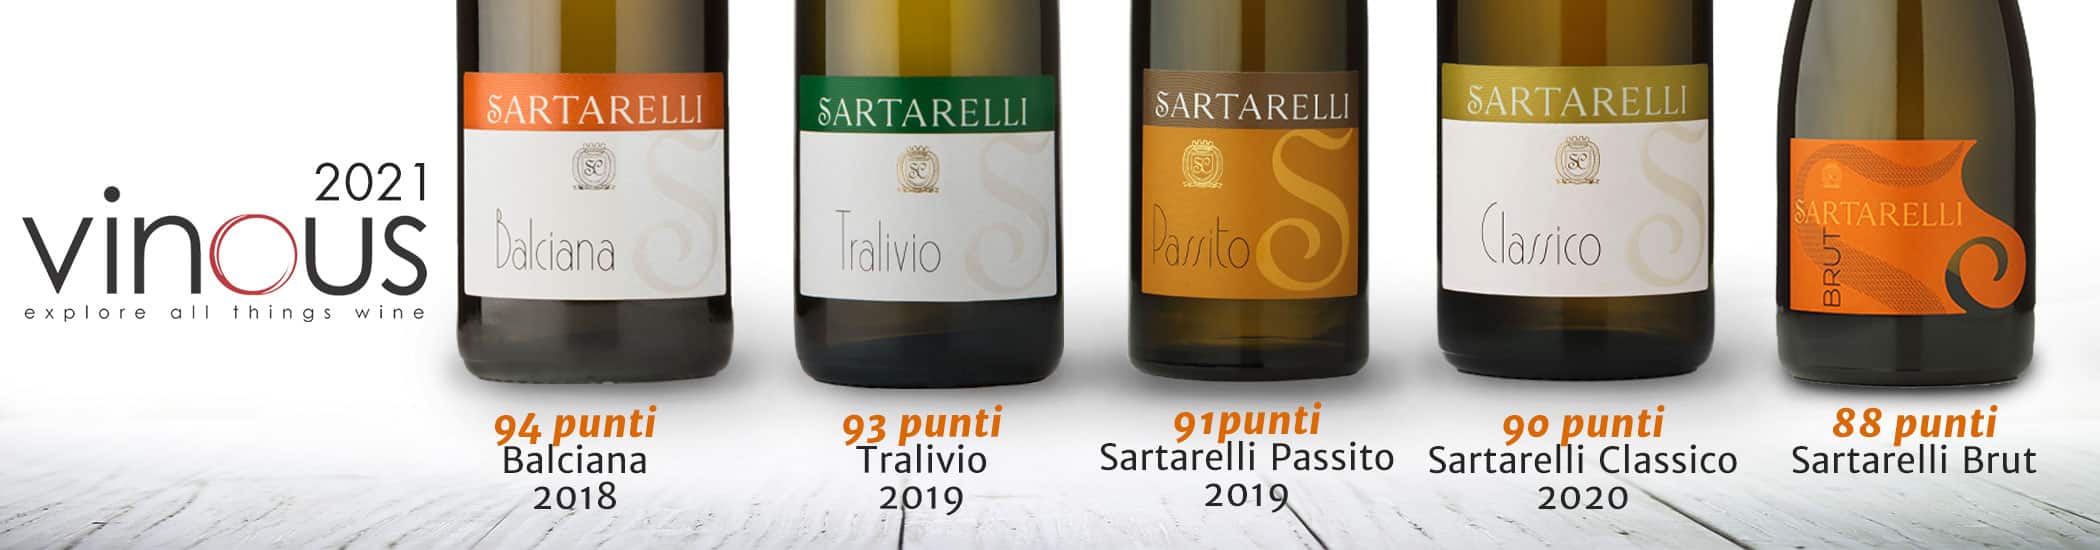 Sartarelli-Vinous 2021 (News-Ita)